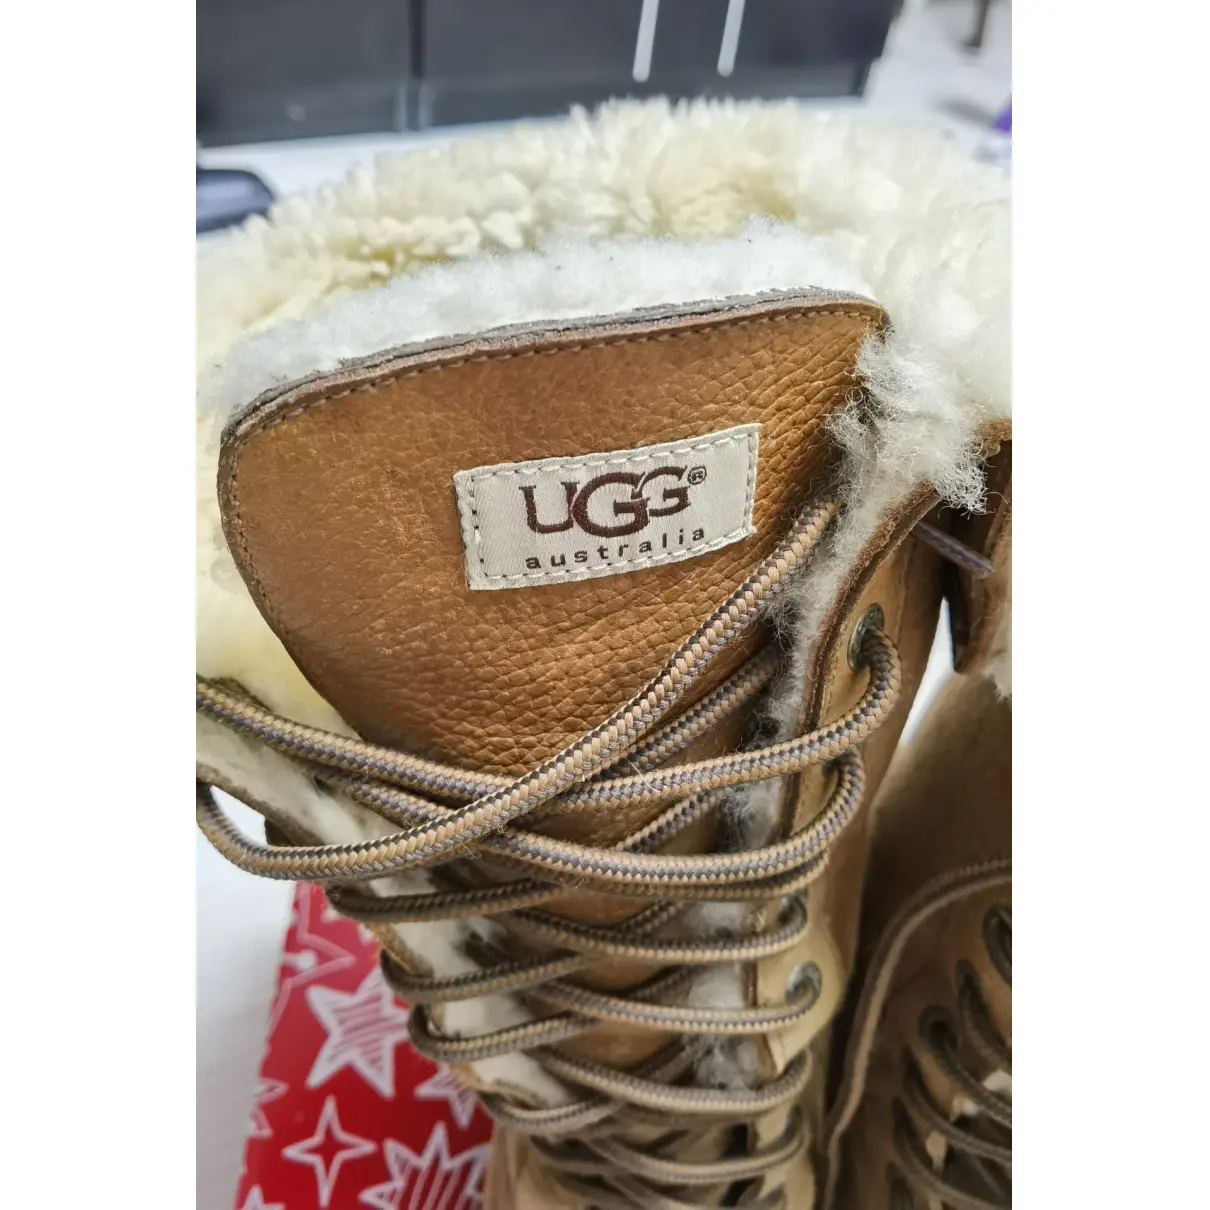 Snow boots Ugg